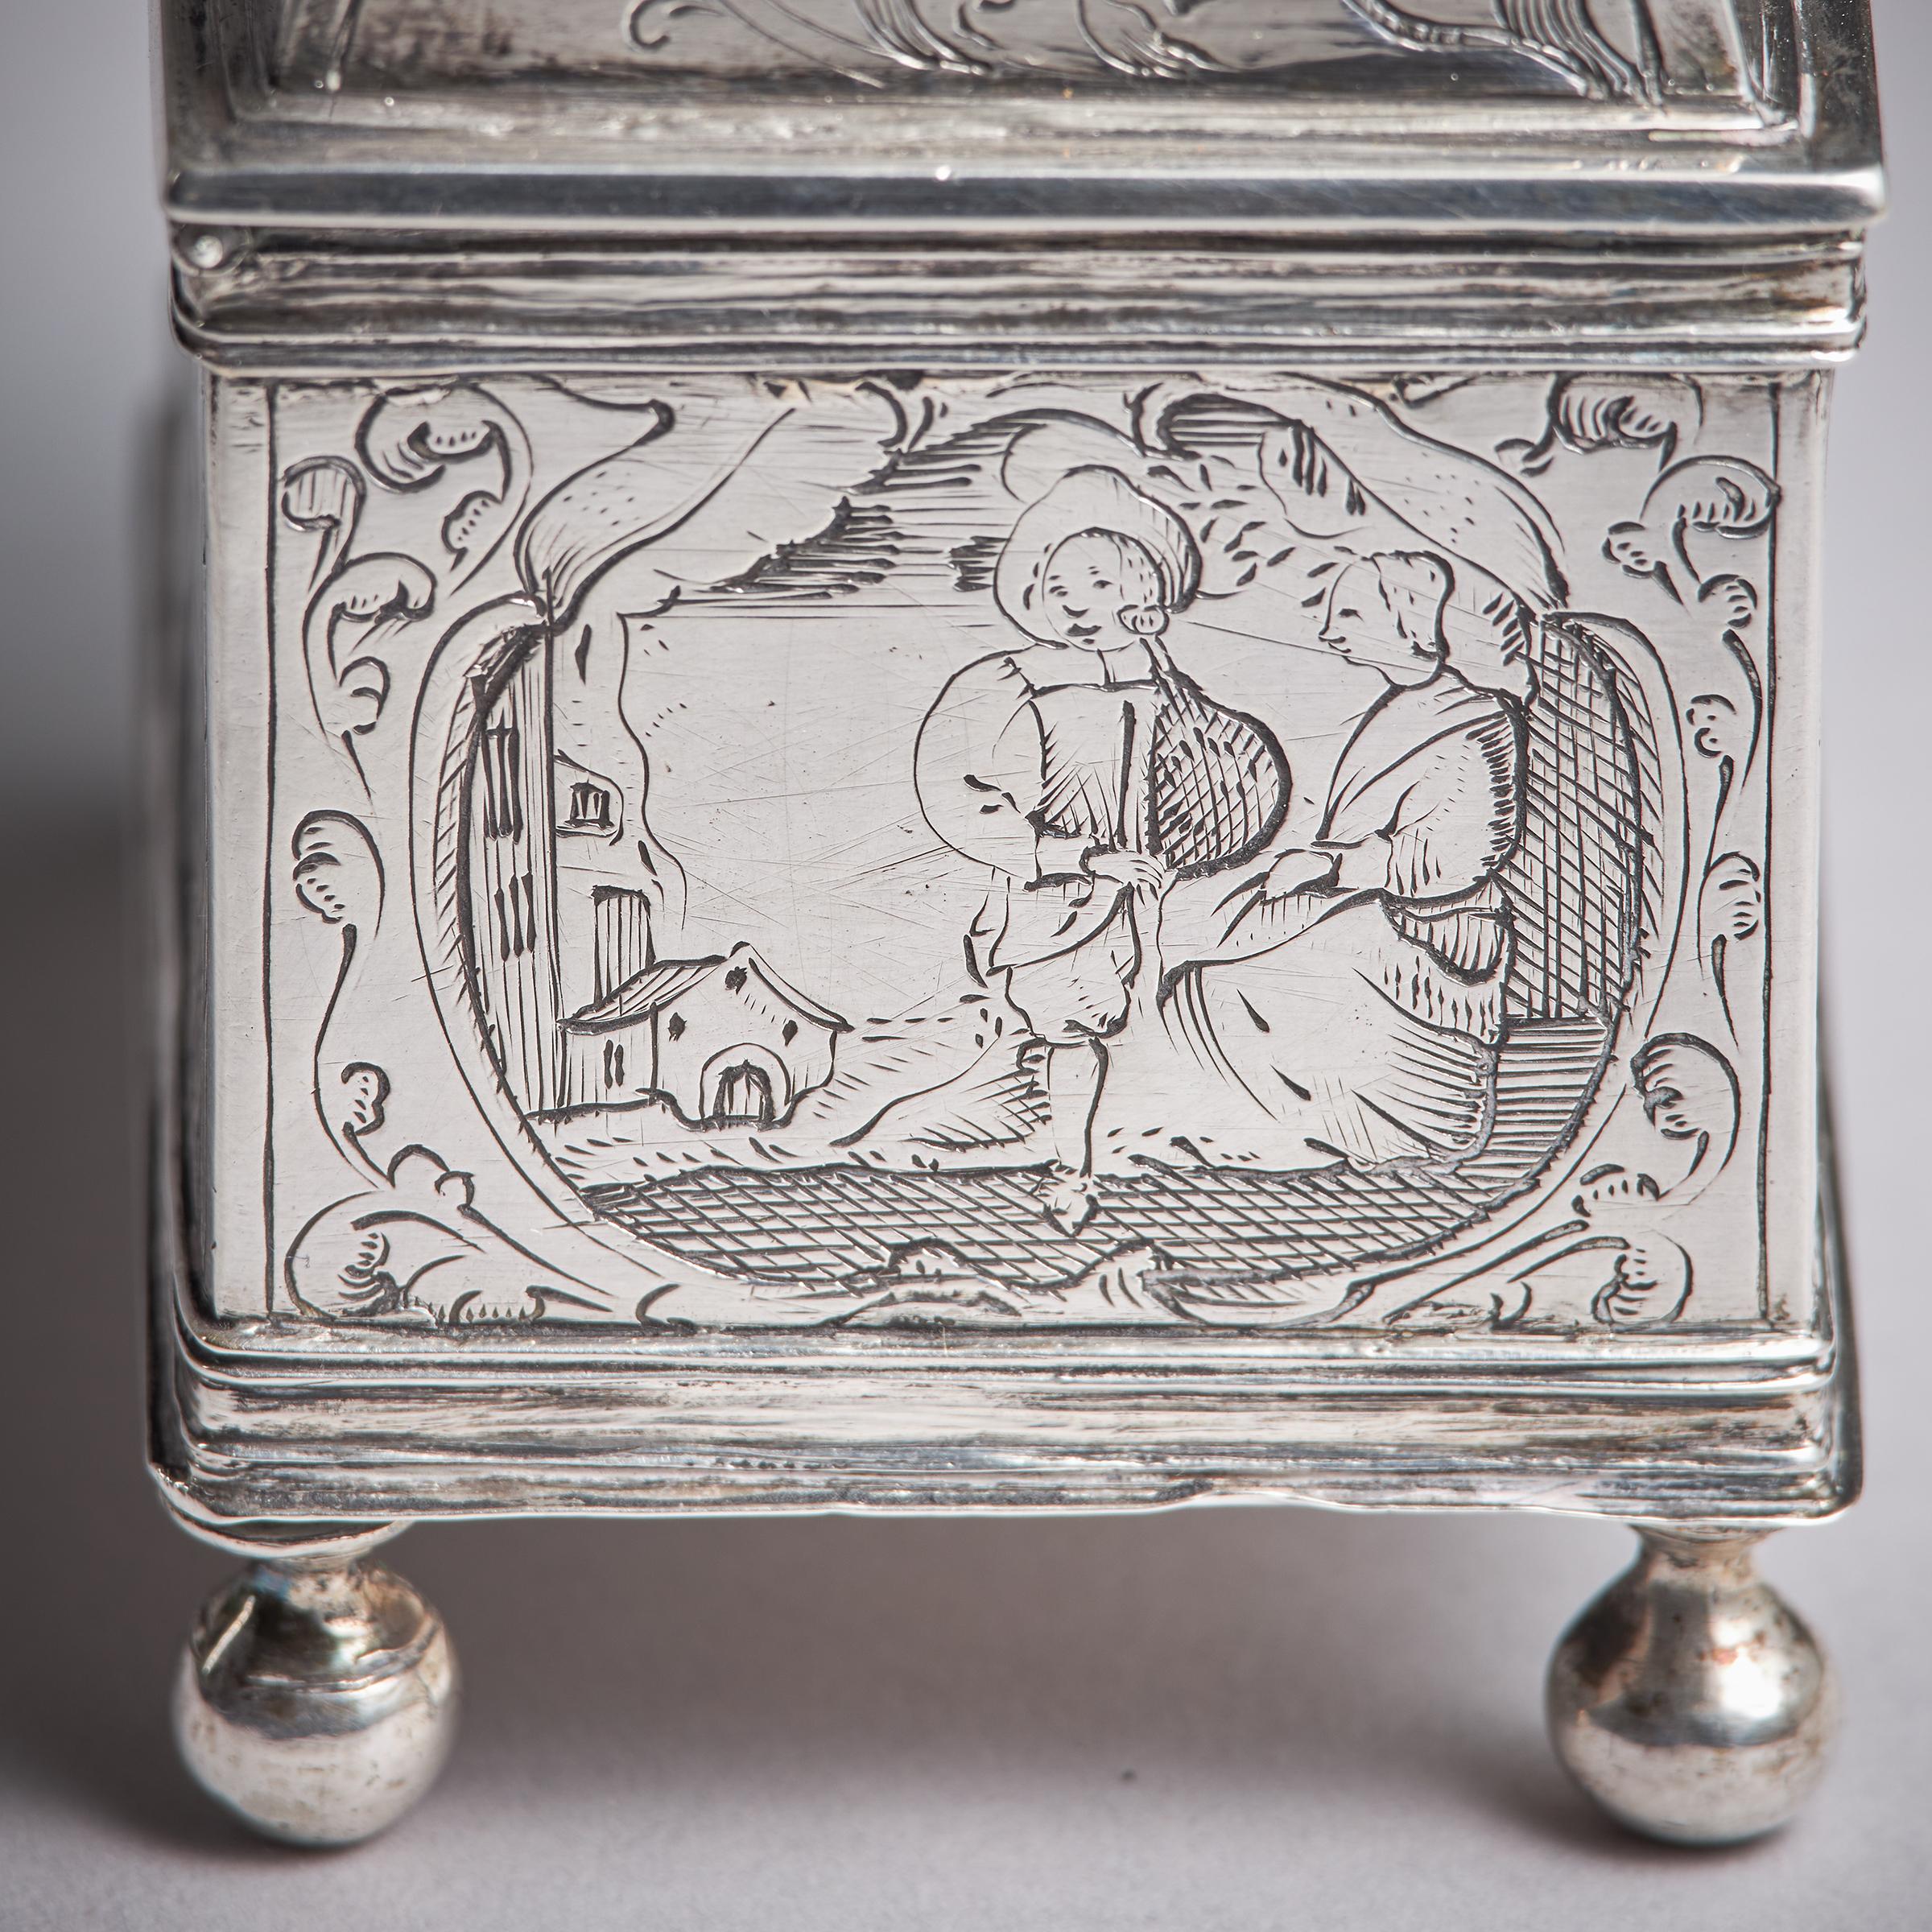 mid-17th century Dutch silver marriage coffin-15